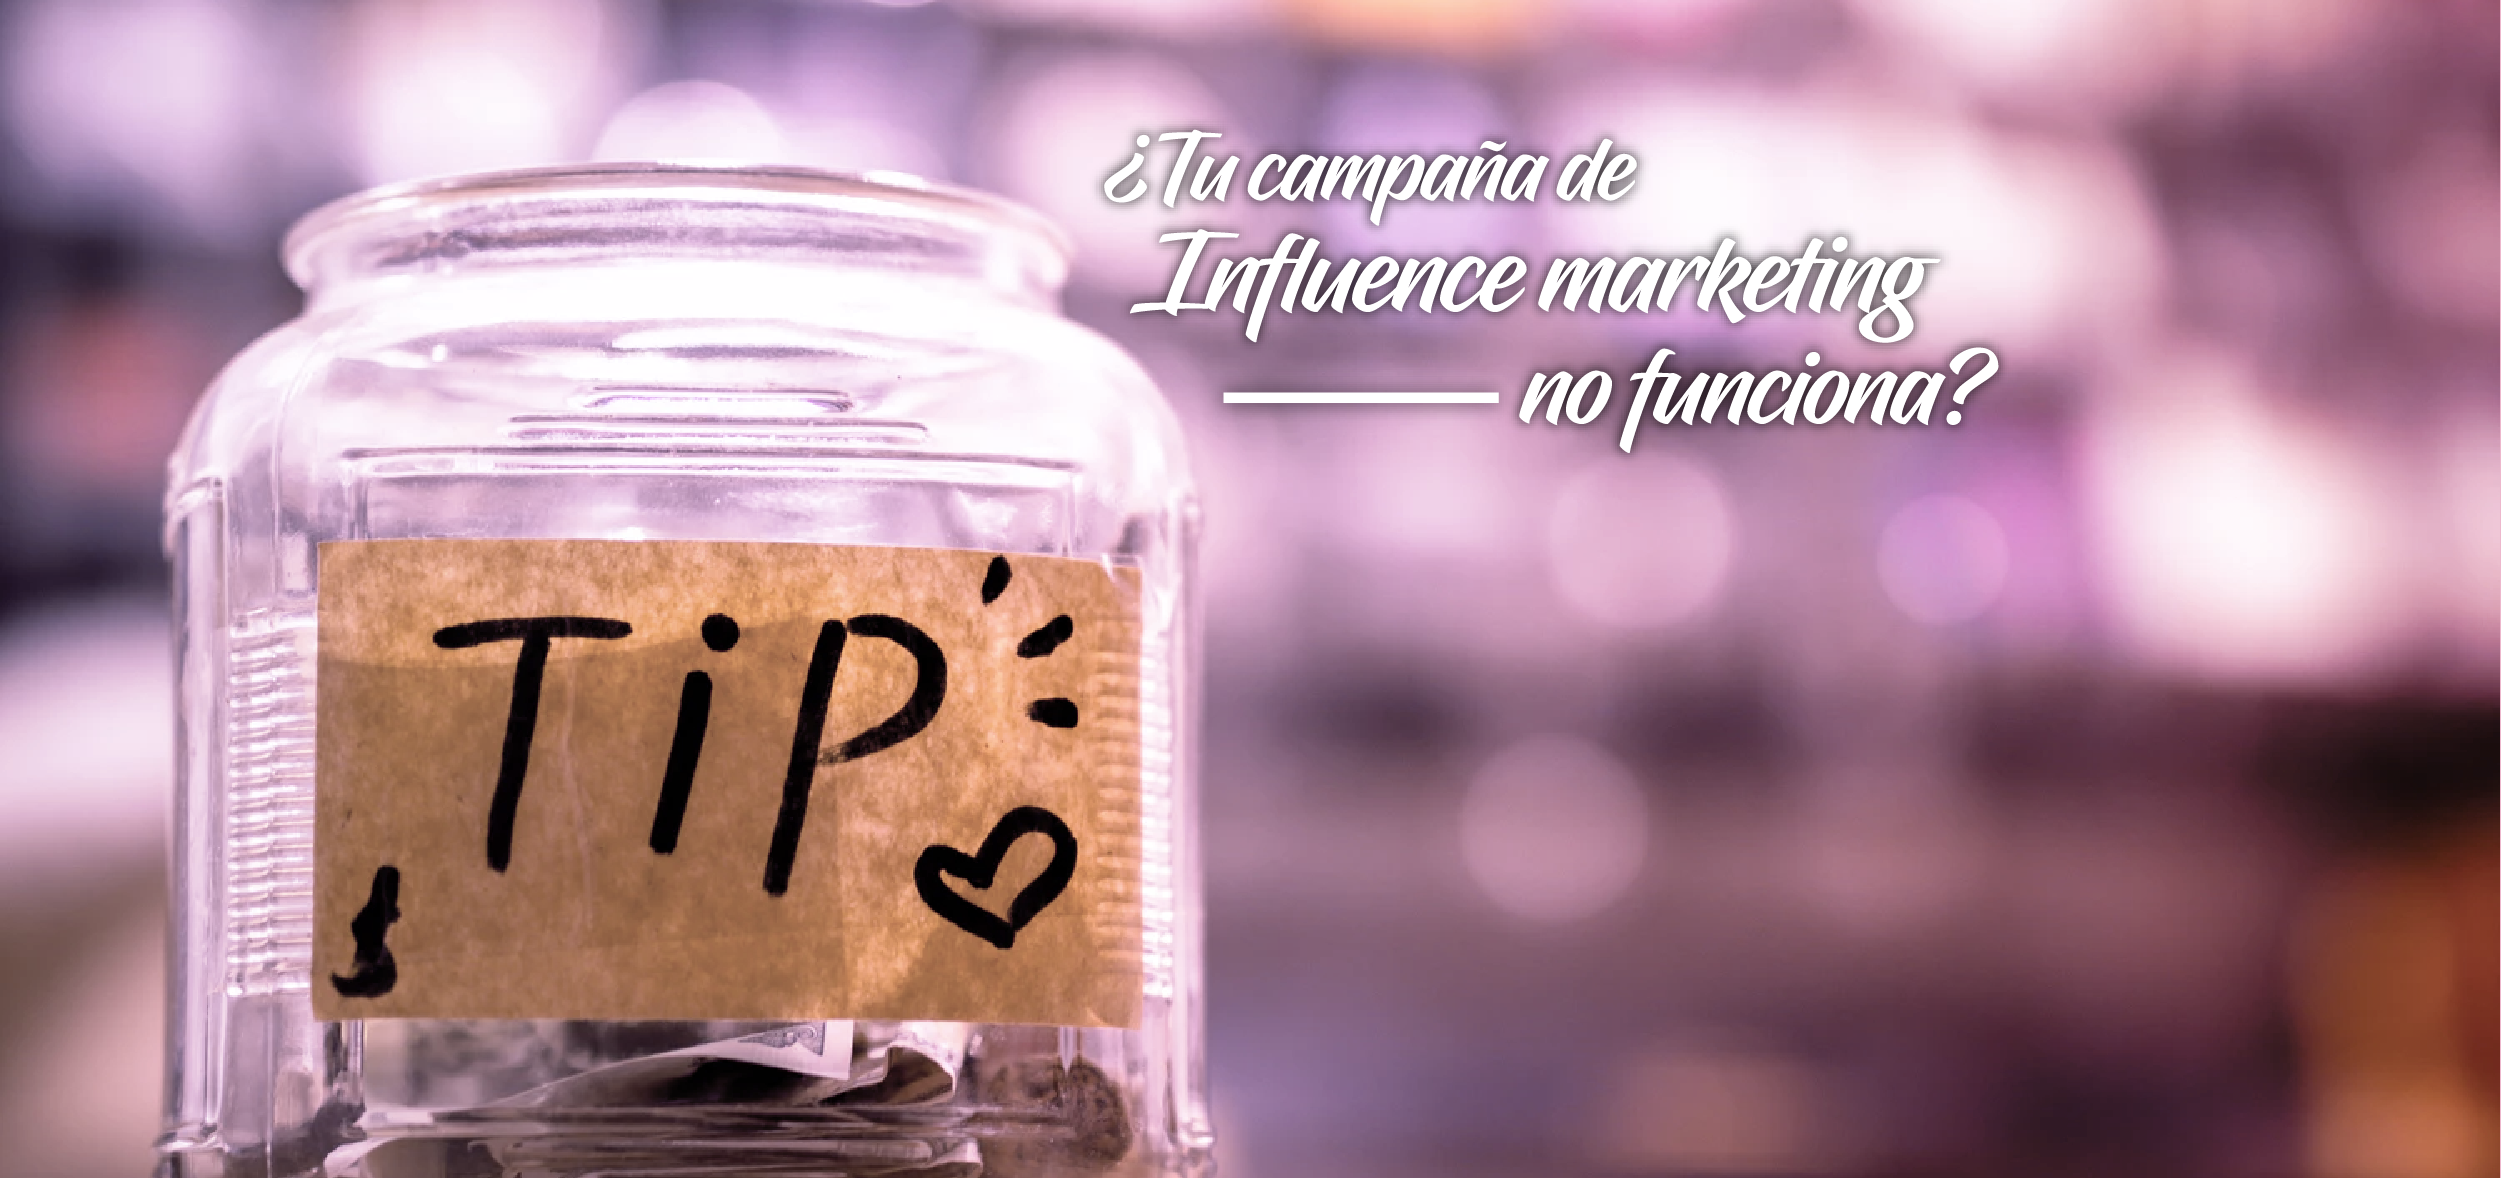 Tu campaña de Influence marketing no funciona ¡Aplica estos tips!